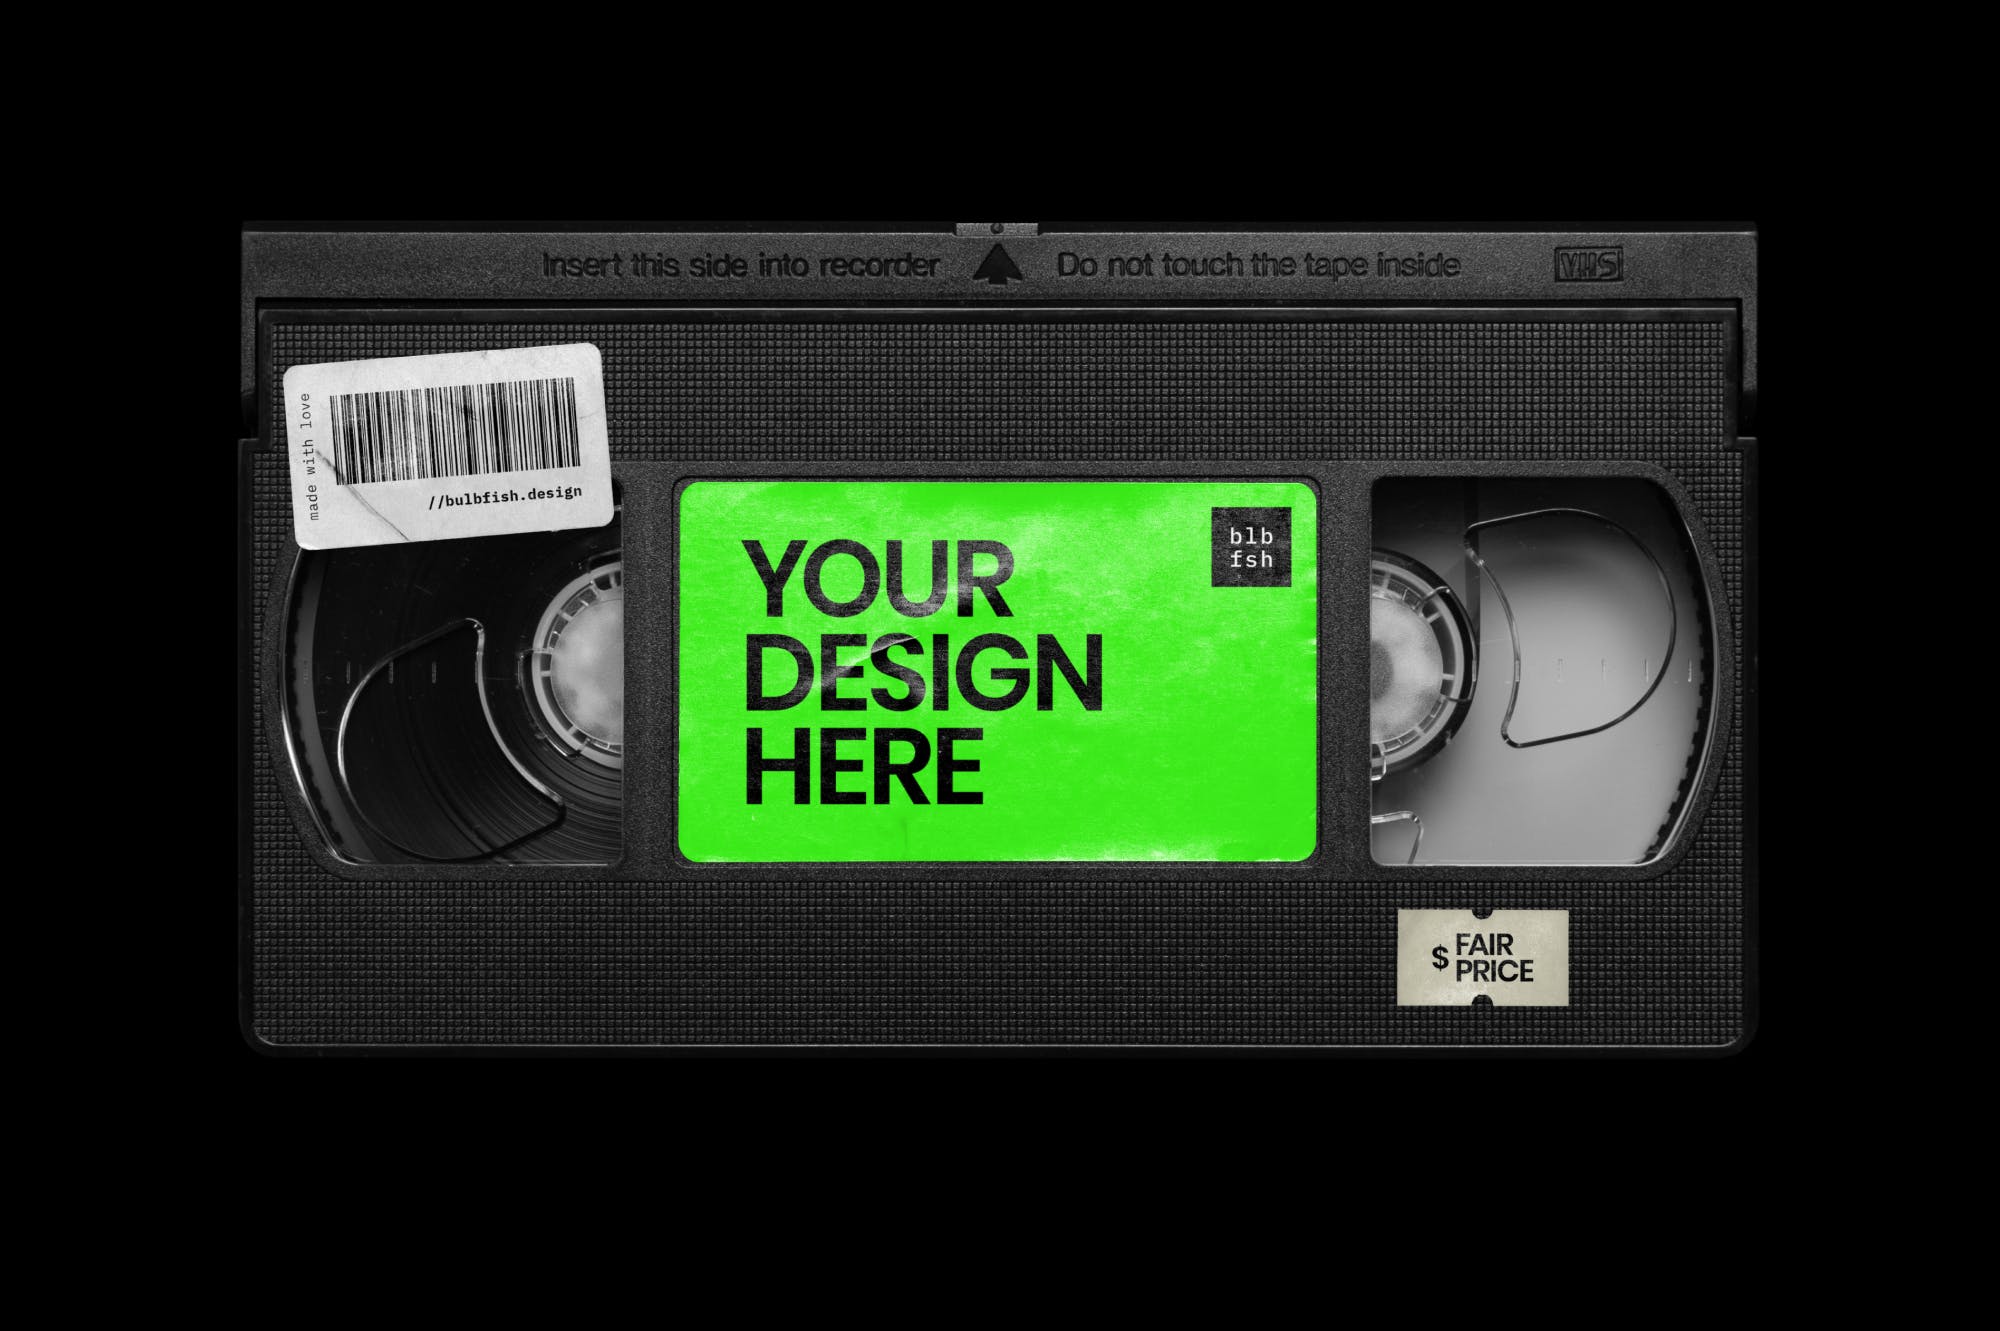 VHS磁带设计效果图第一素材精选样机 VHS Cassette Mockup插图(2)